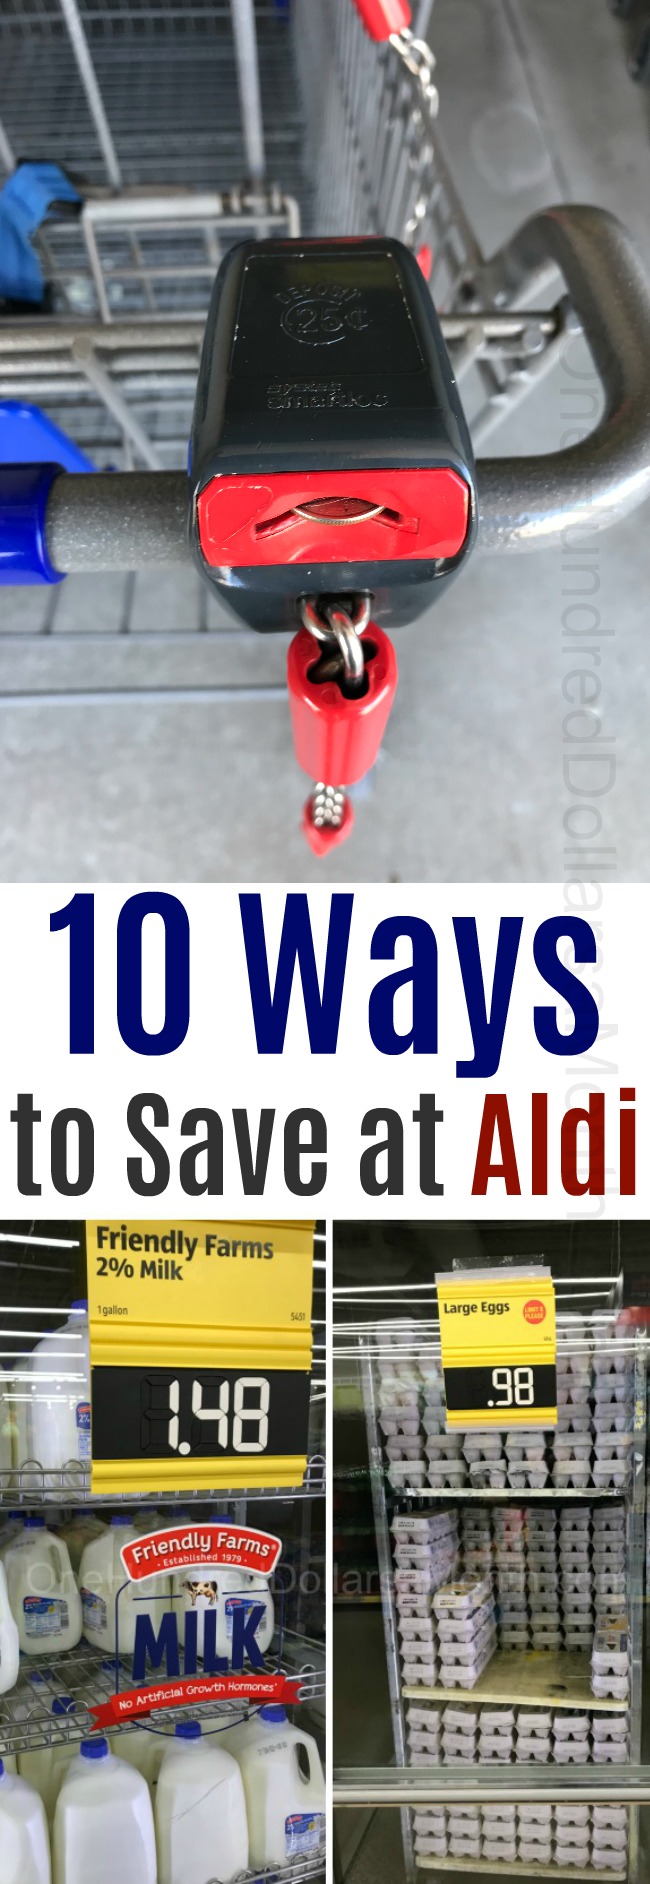 10 Ways to Save at Aldi